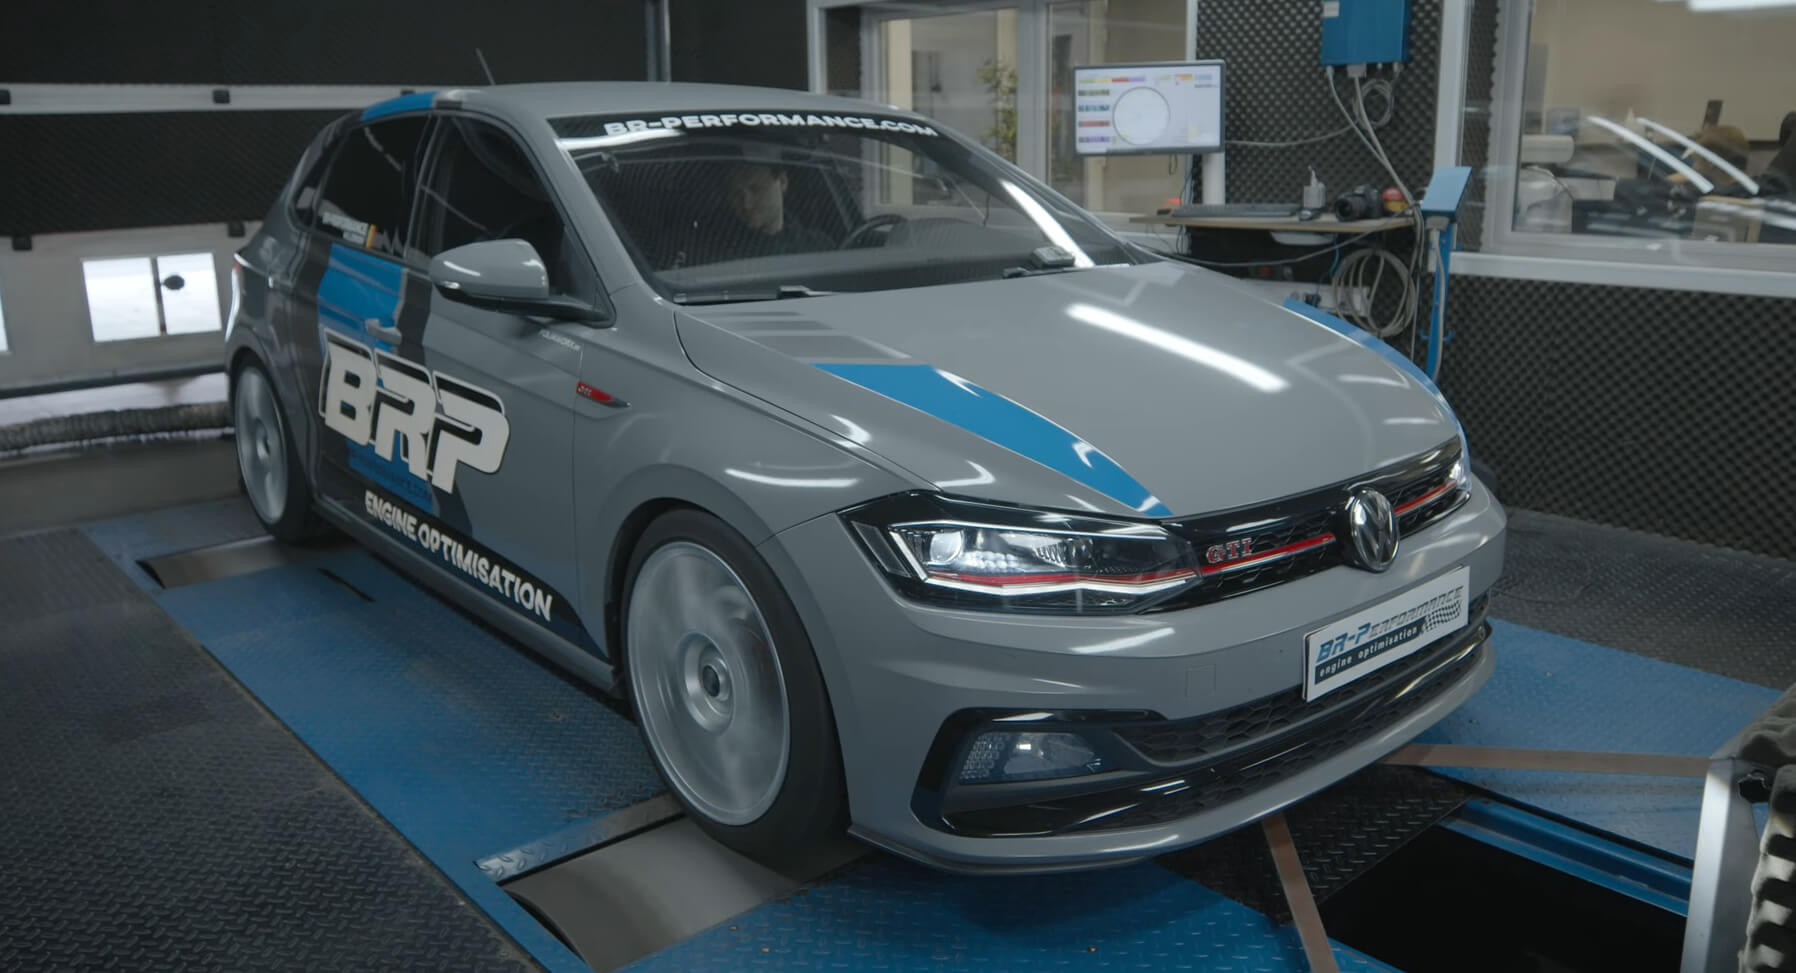 VW Polo GTI Takes Shape In Unofficial Renderings Ahead Of Debut